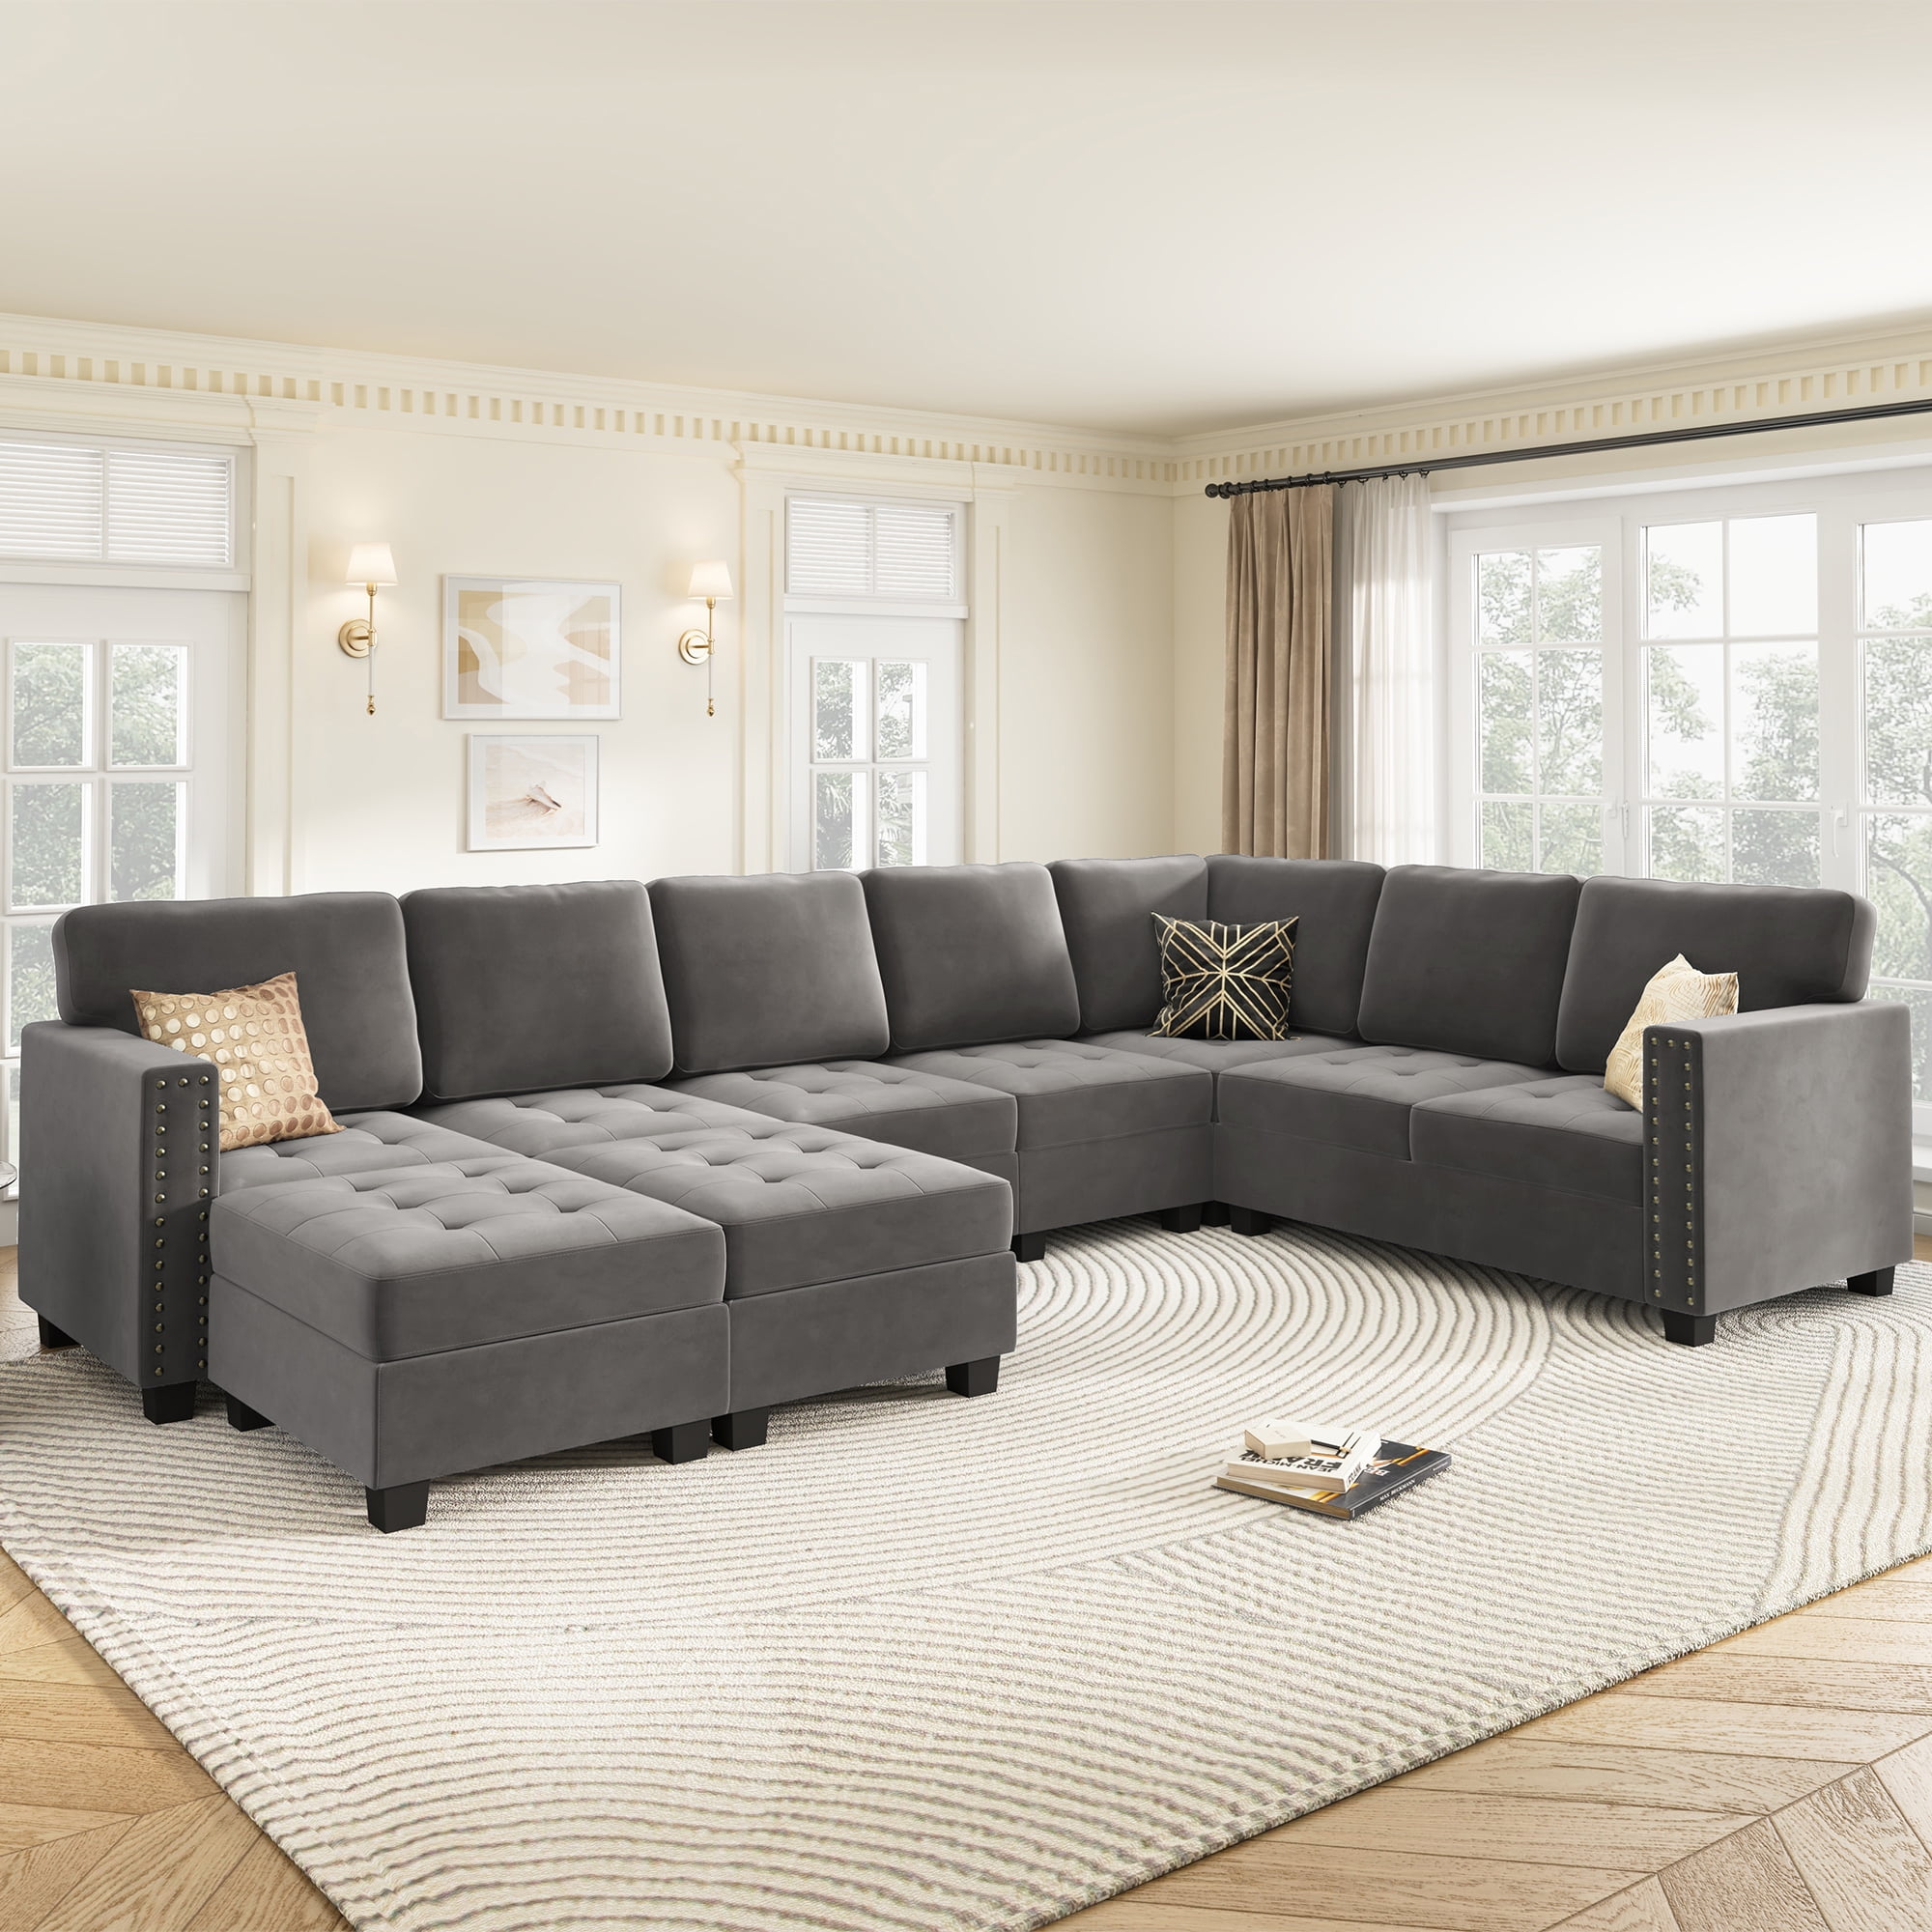 Honbay Upholstered L Shaped Sofa Bed